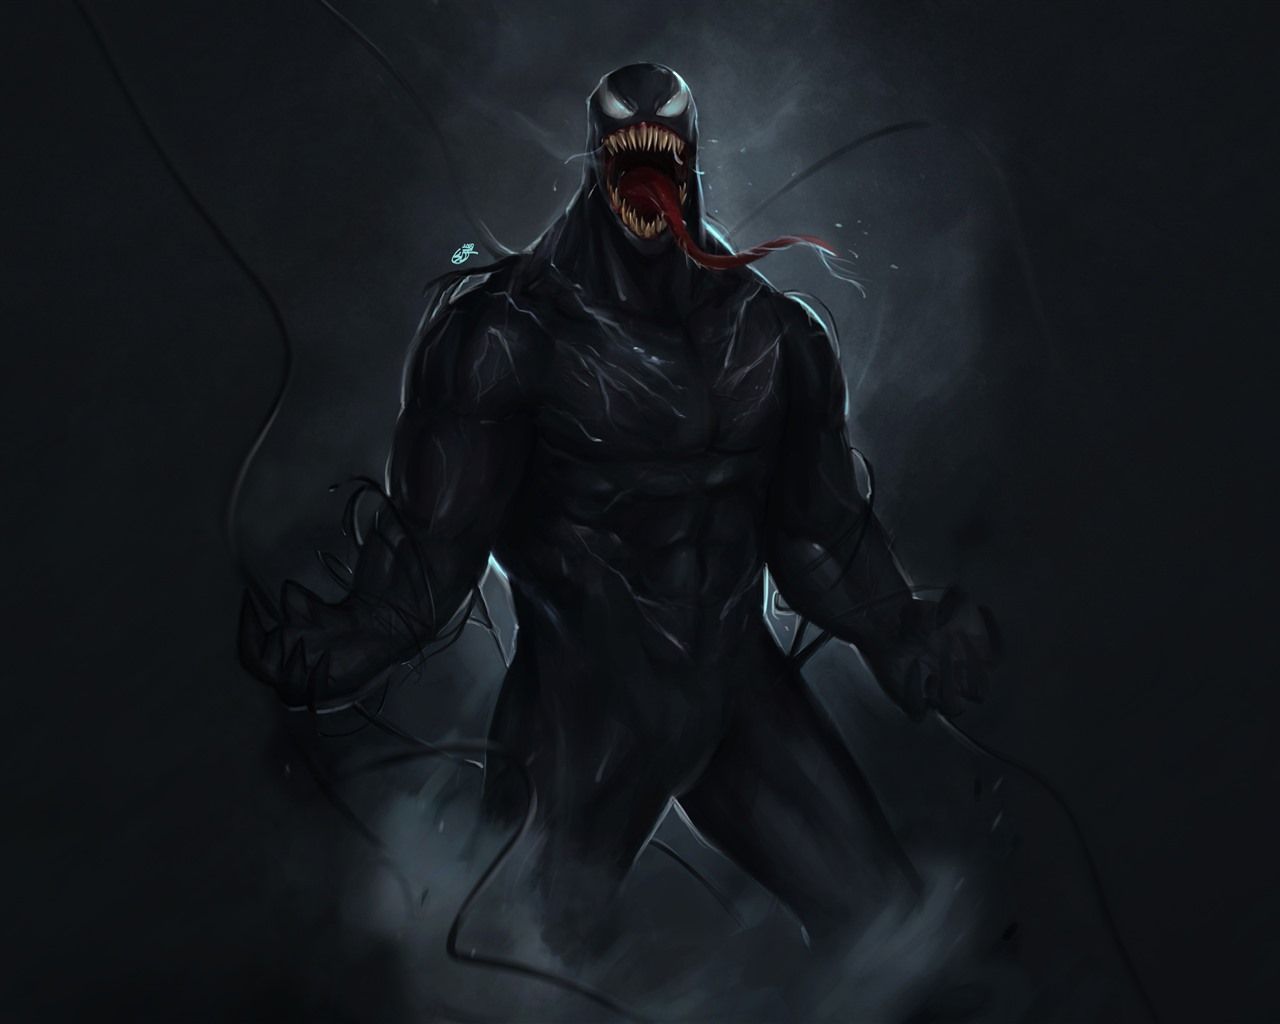 Wallpaper Venom, art picture, black background 3840x2160 UHD 4K Picture, Image